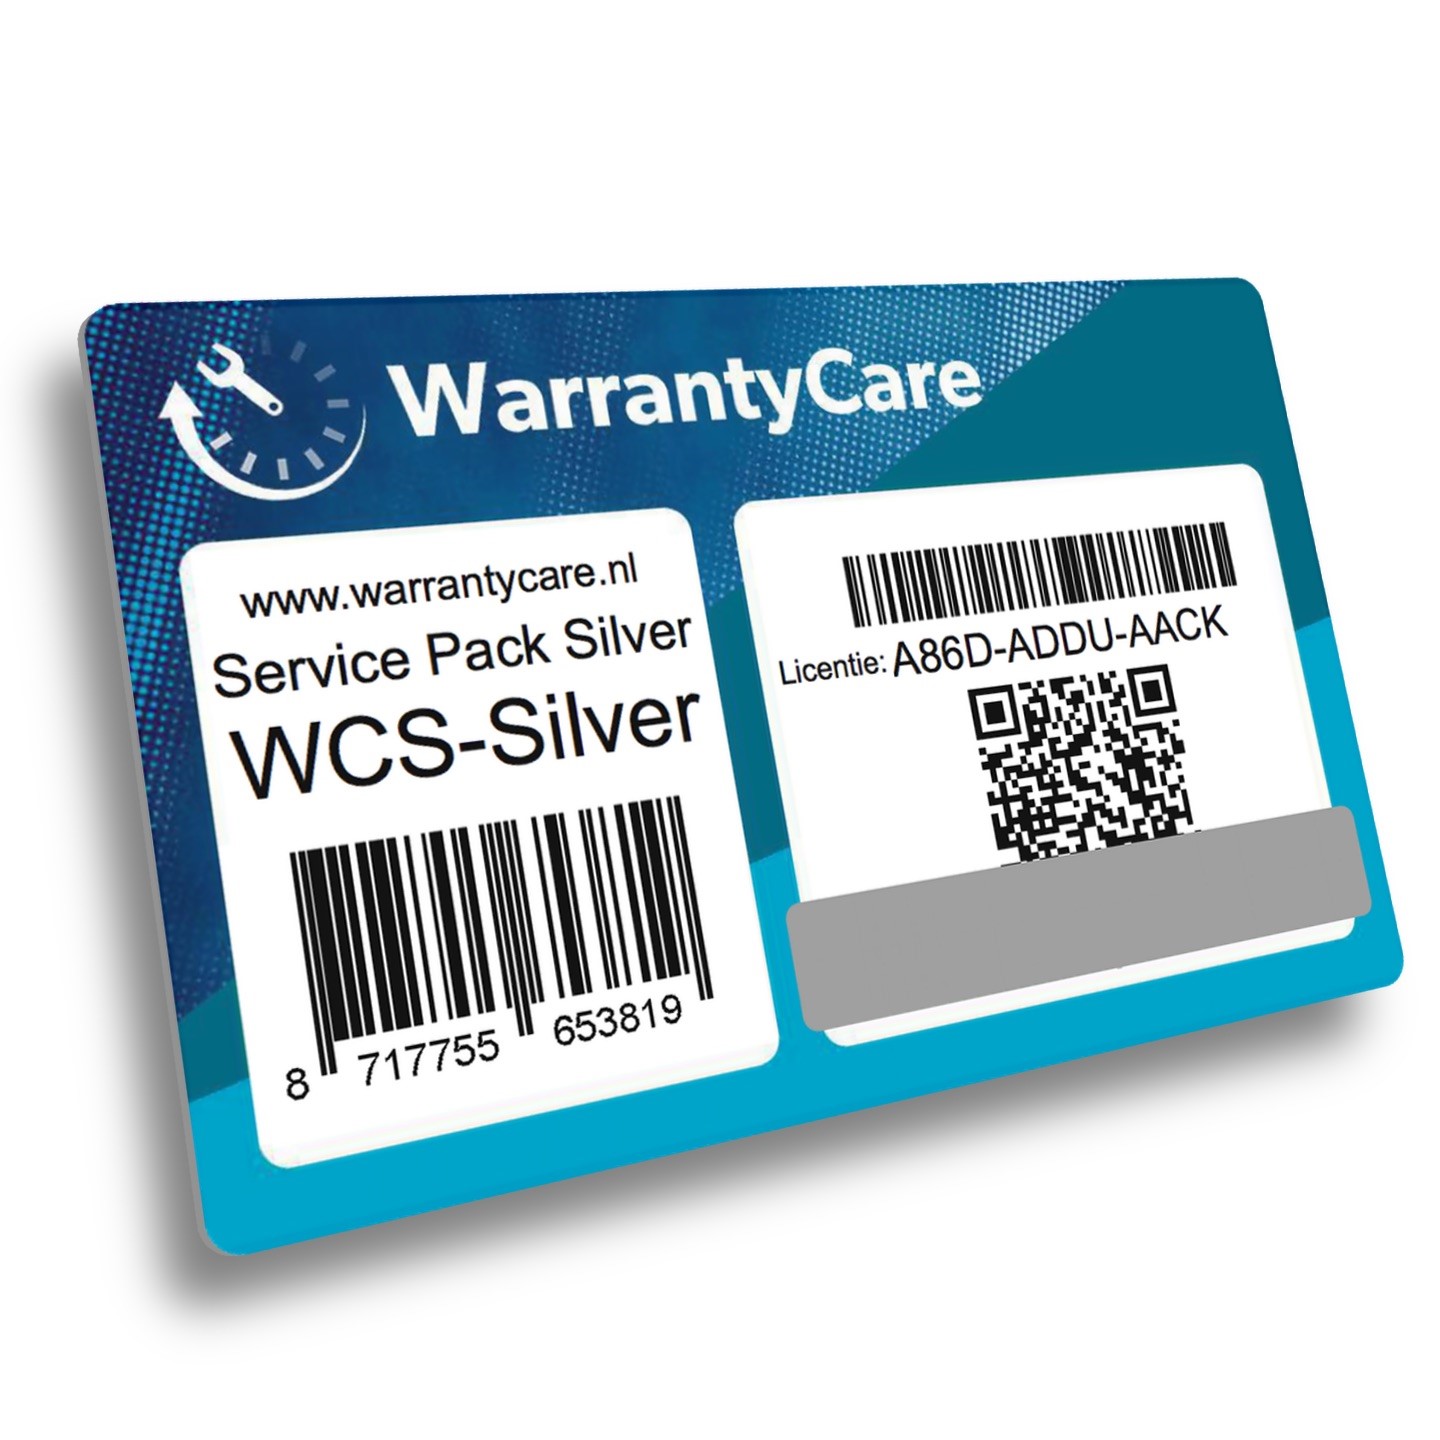 Warrantycare Service Pack C level Silver